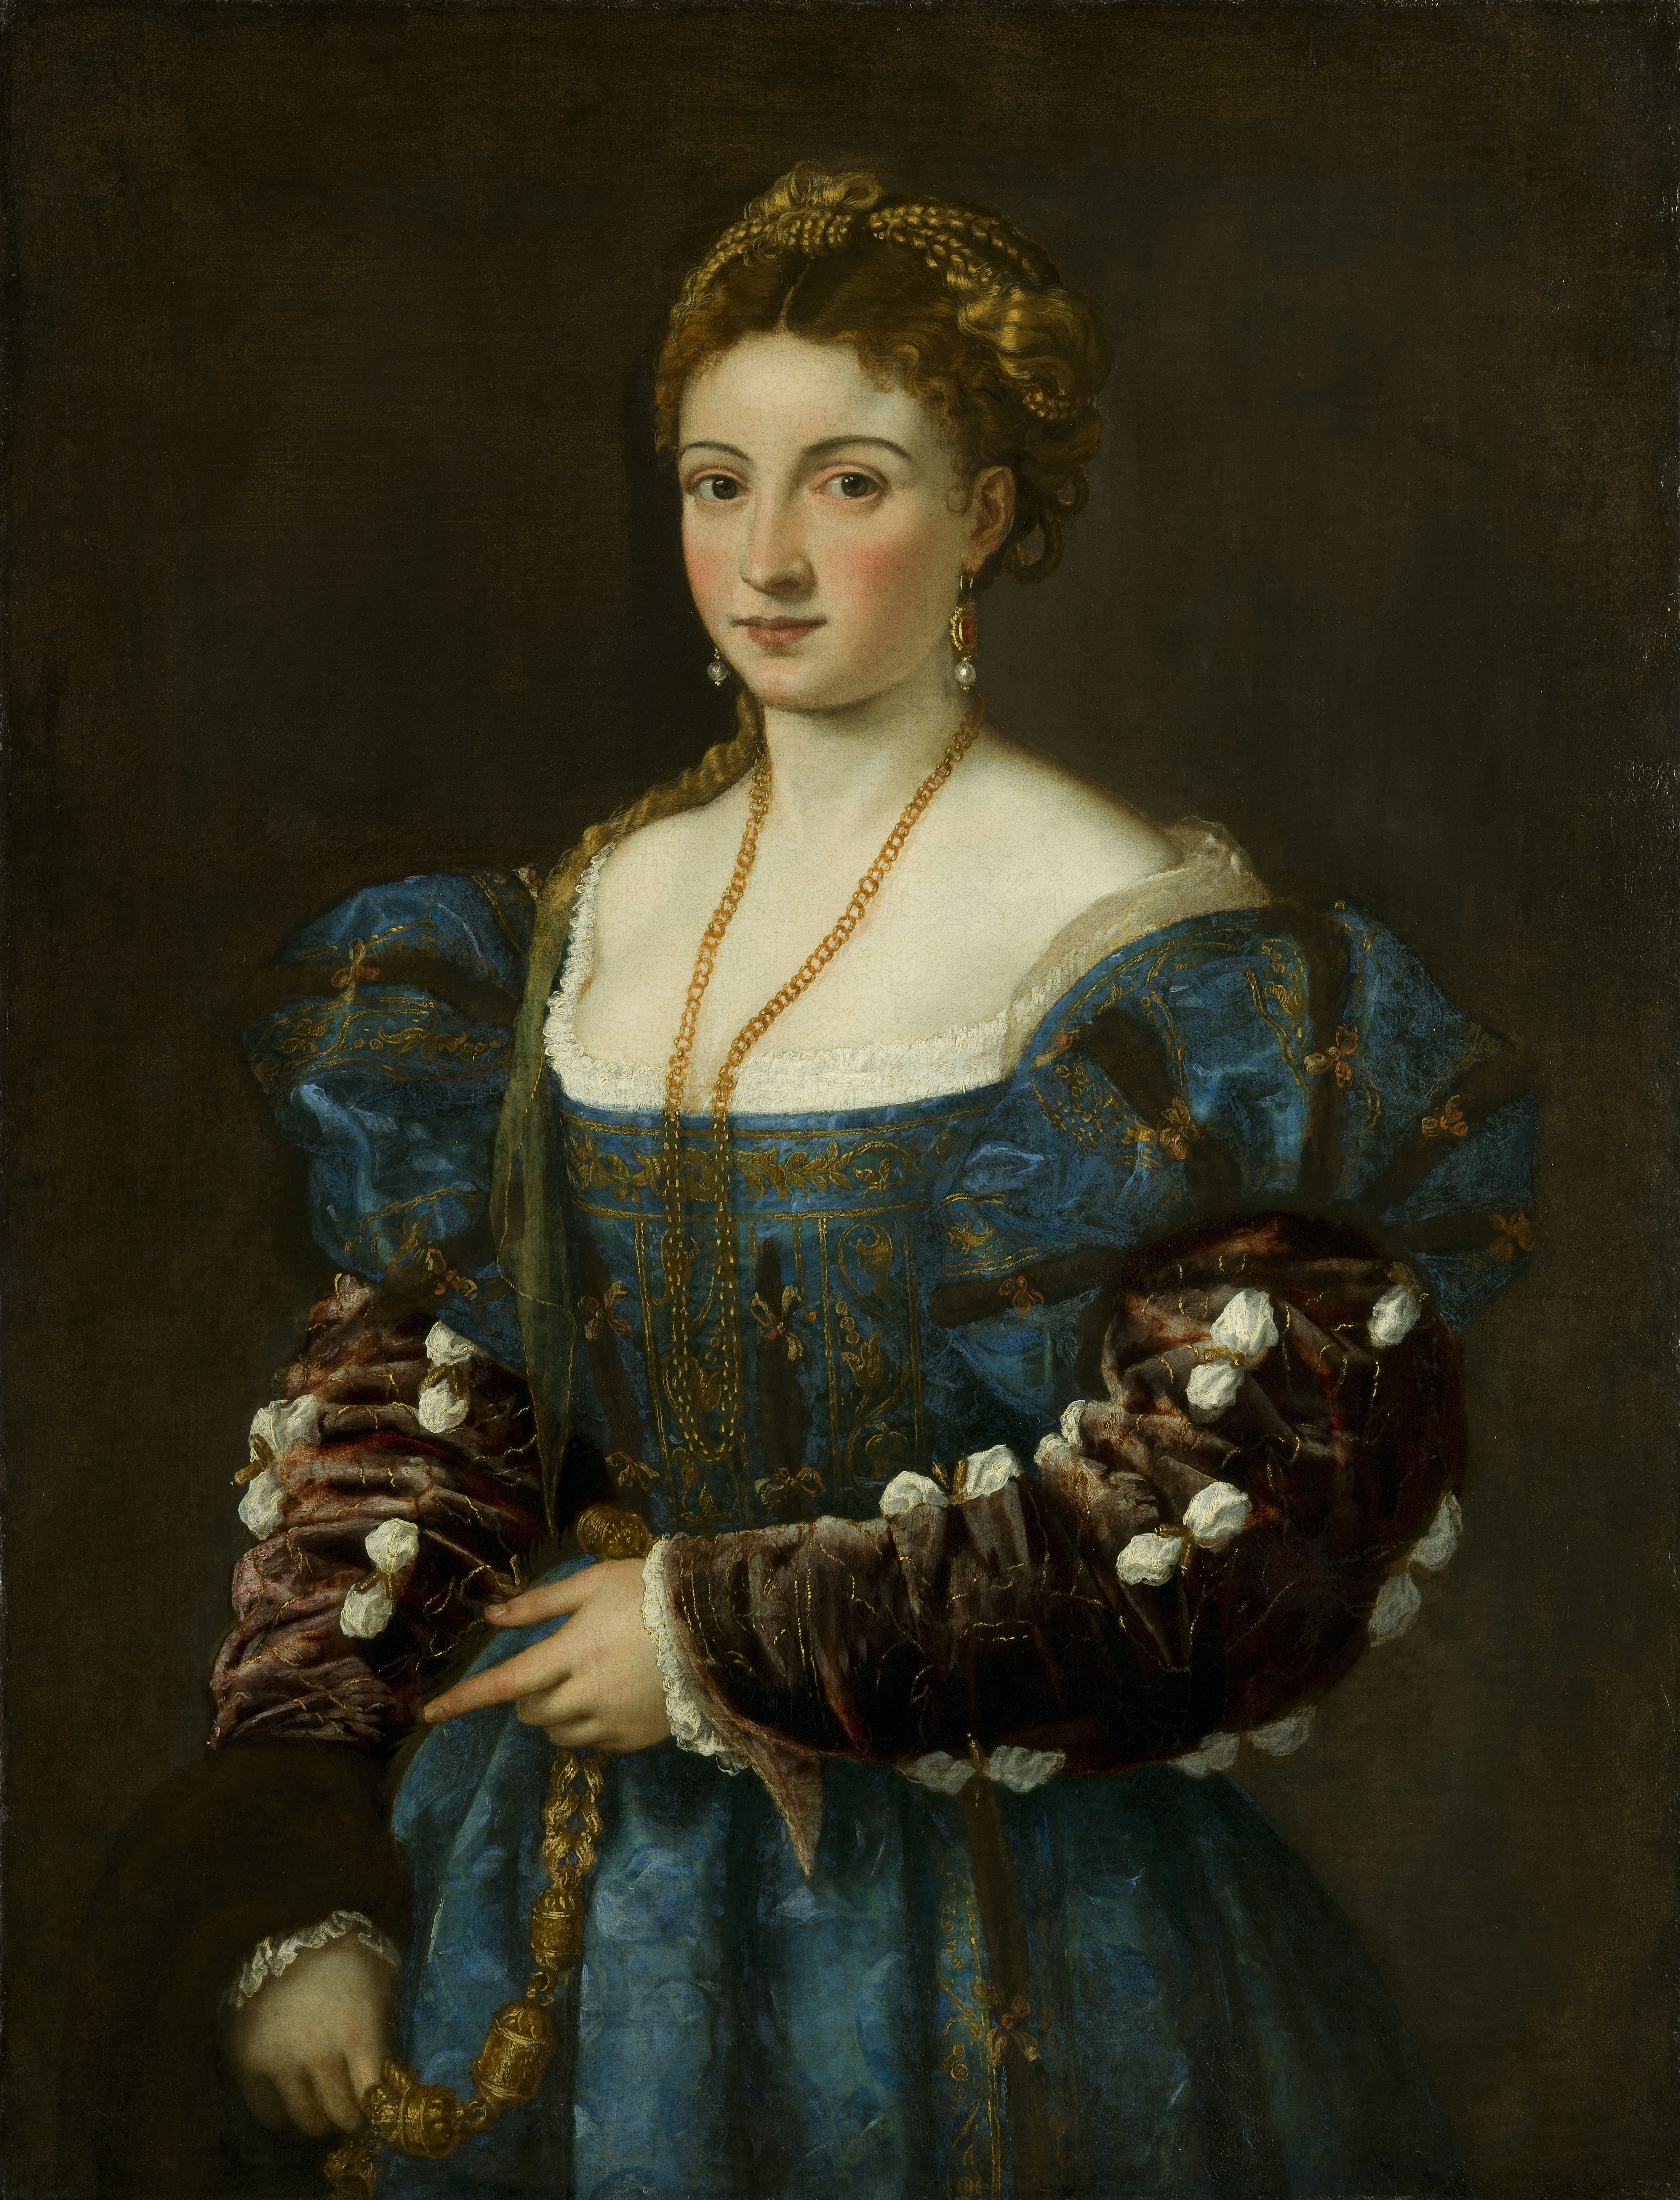 Portrait of a Lady (“La Bella”)